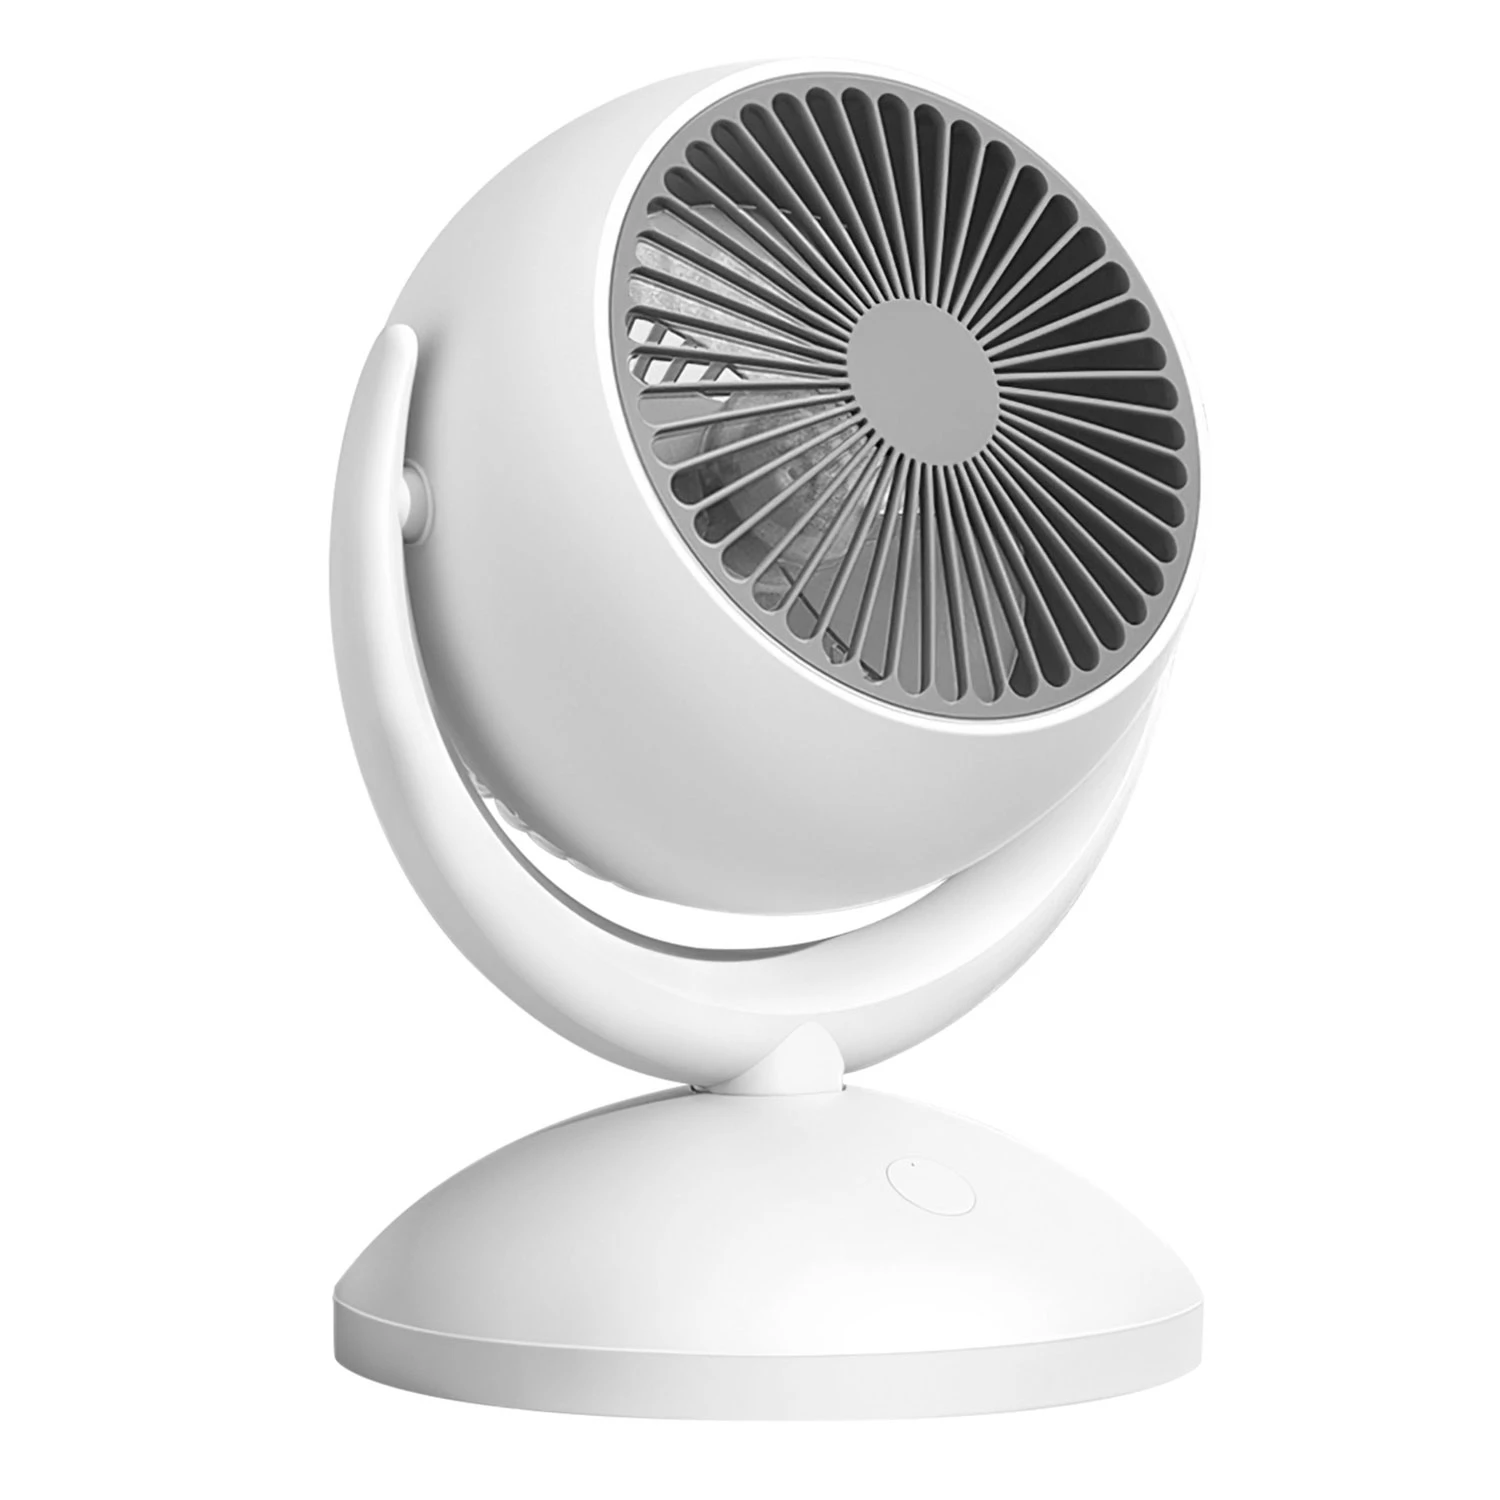 Portable Rechargeable Desk Fan - 4 Speeds, 360° Tilt, Quiet 40dB - Ideal for Home or Office